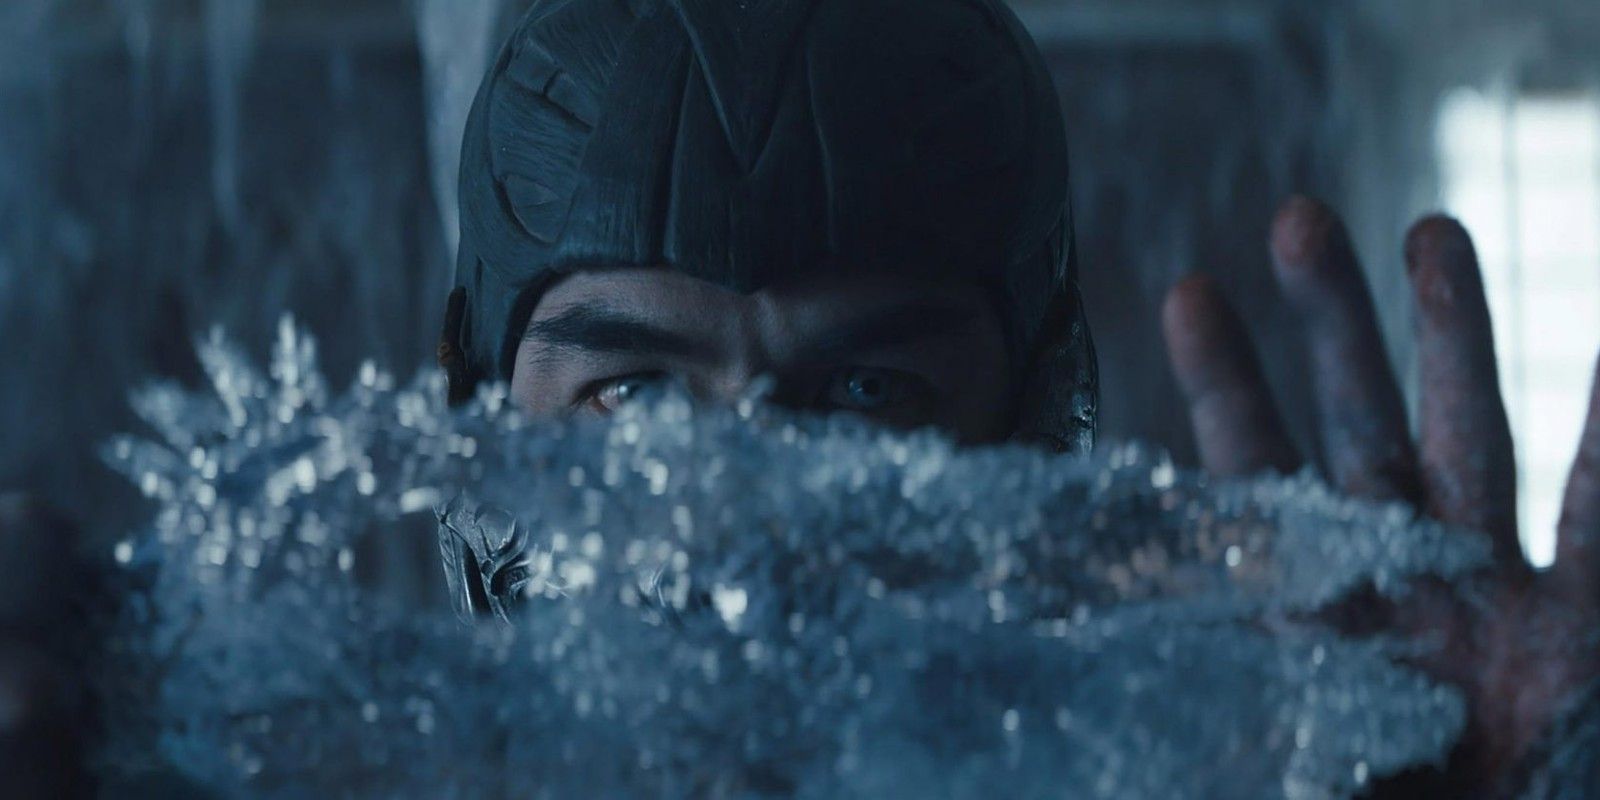 Mortal Kombat Movie Image: First Look At Sub Zero, Liu Kang & Others